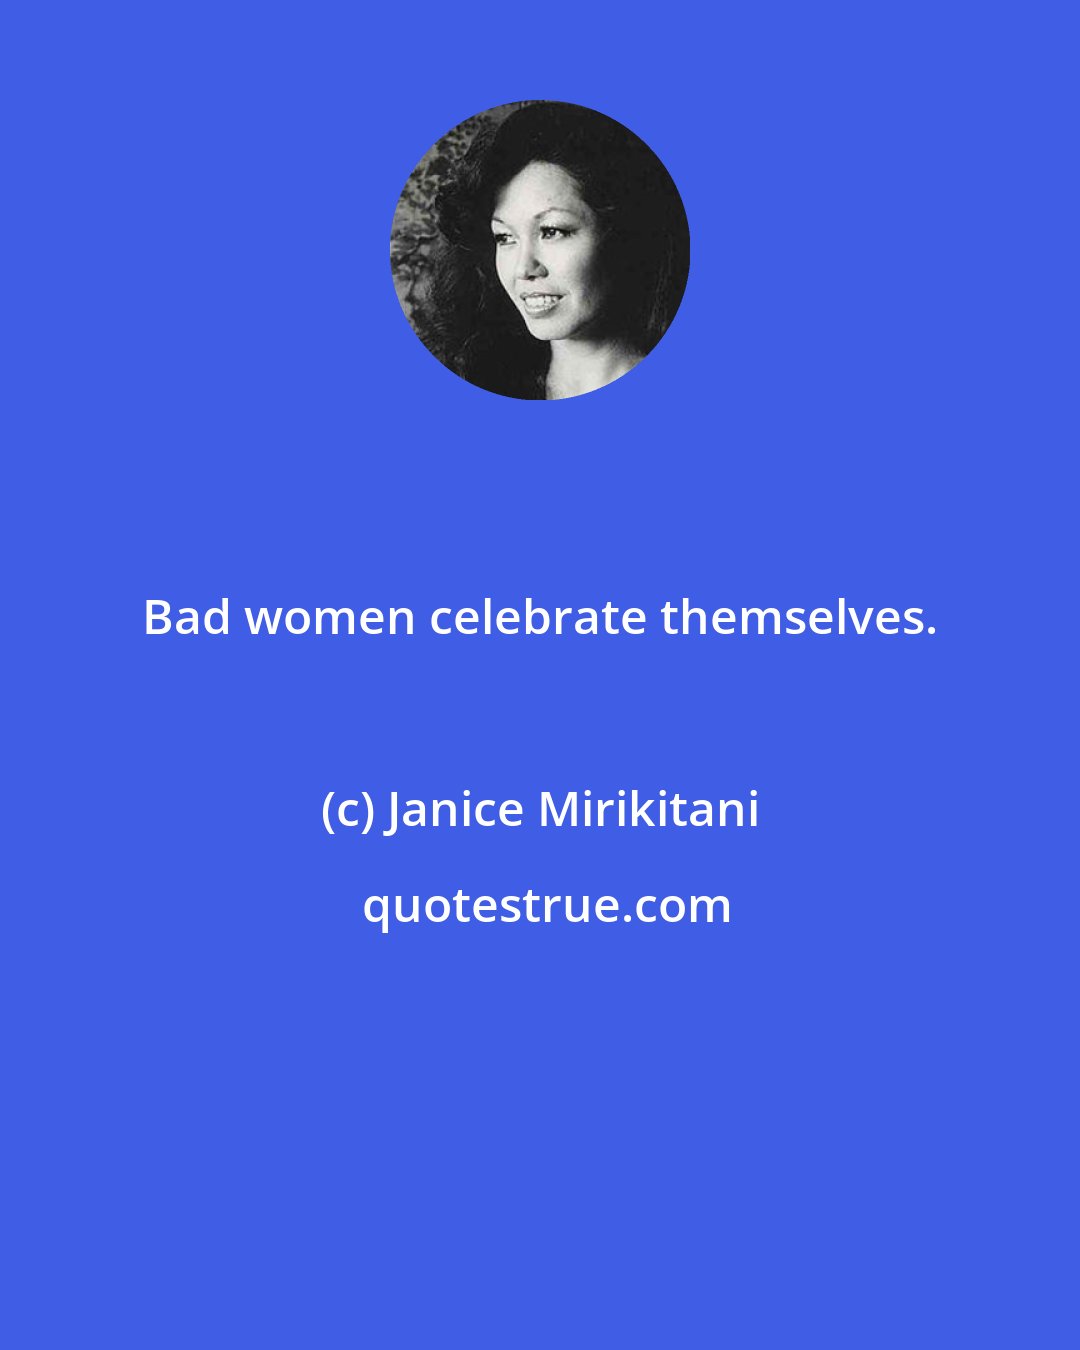 Janice Mirikitani: Bad women celebrate themselves.